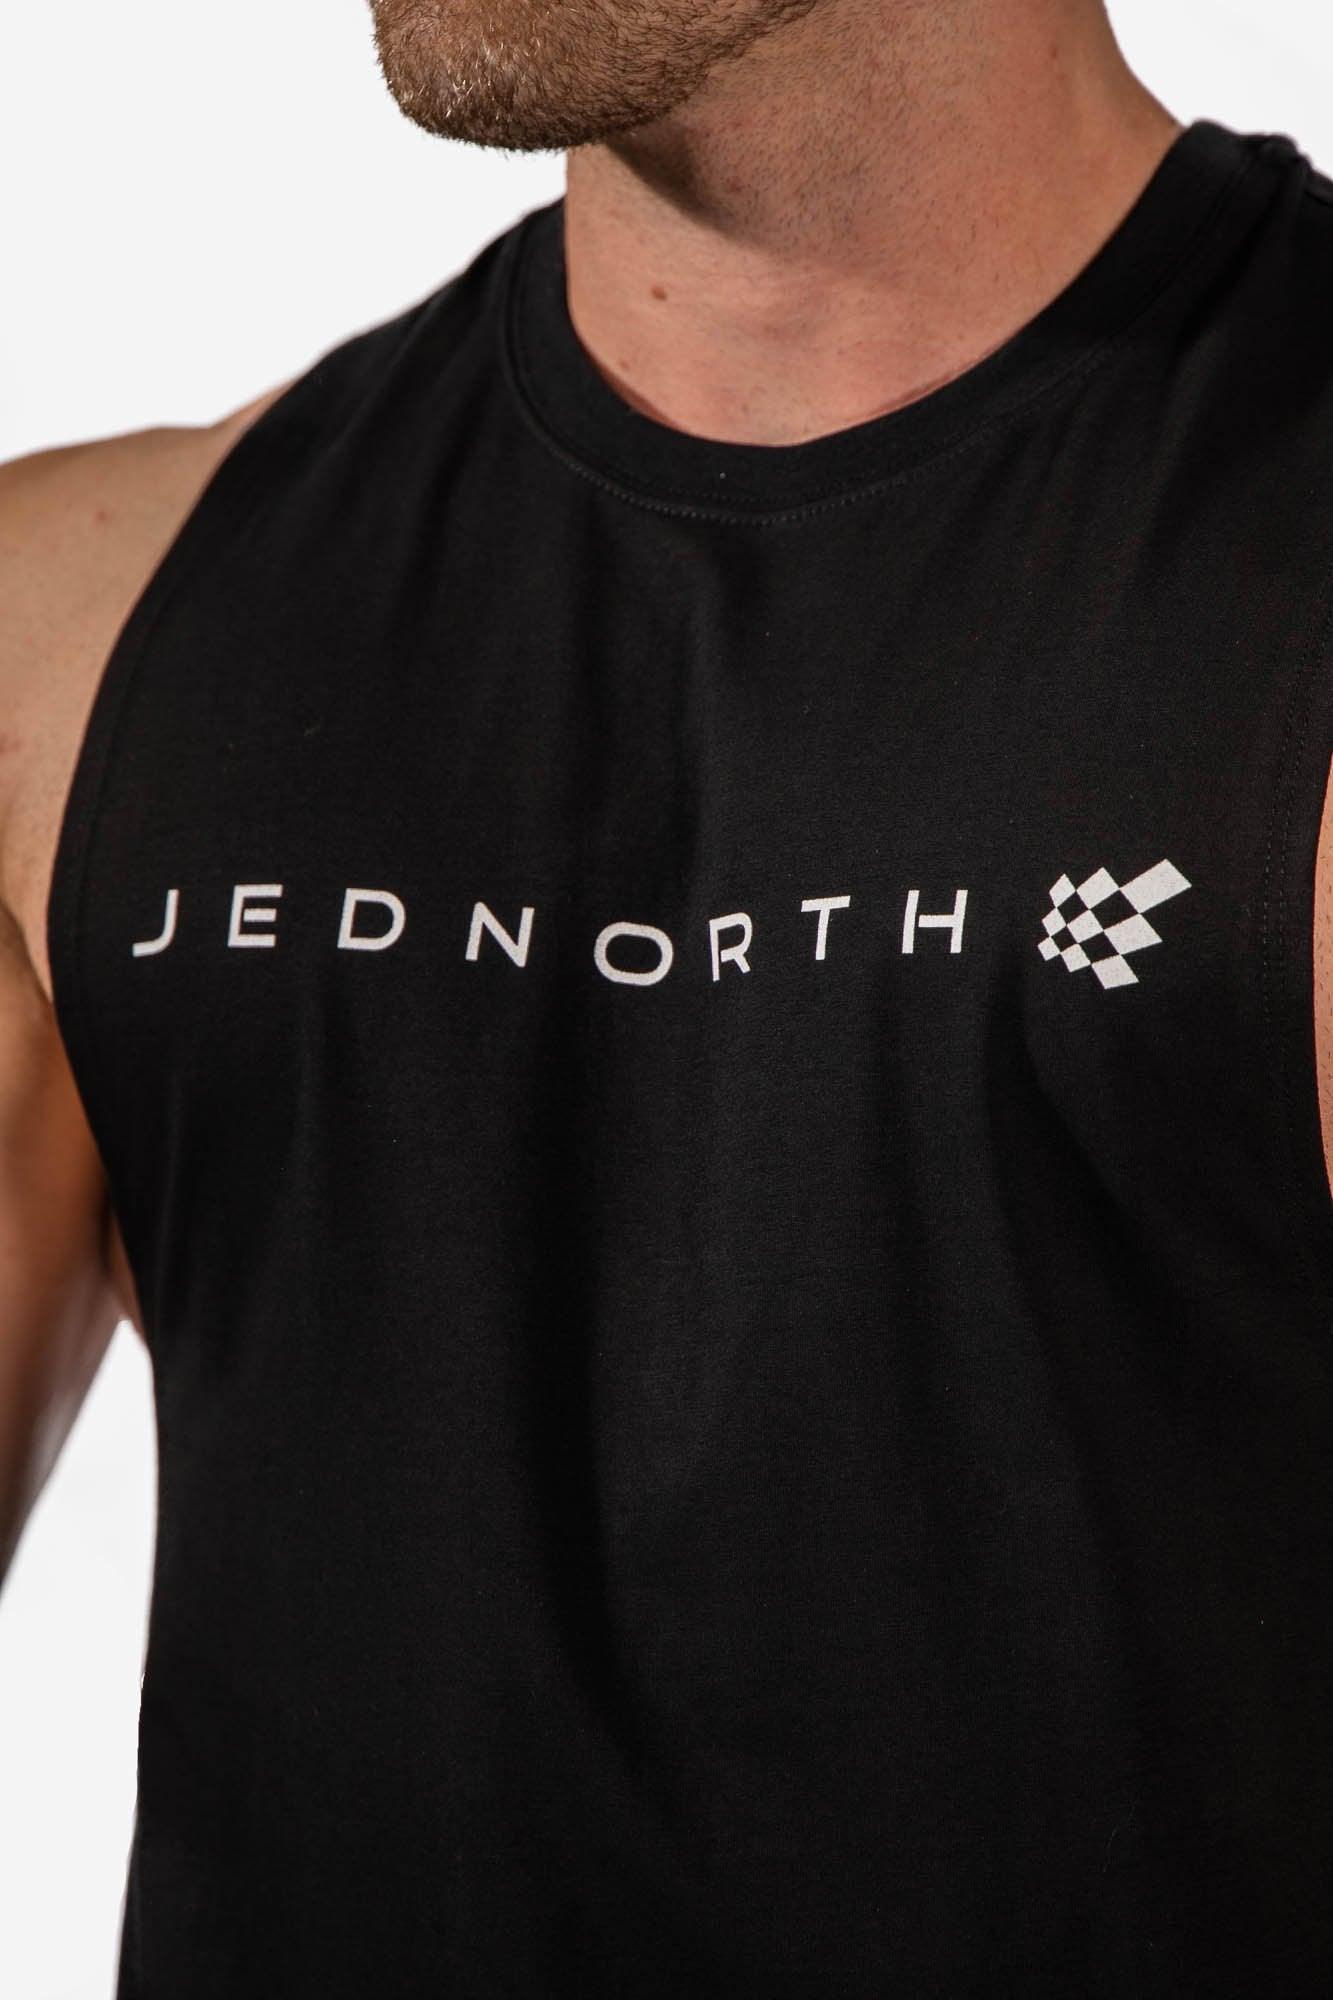 Men's Sleeveless Cut Off Tank Top Shirt Tank Tops Jed North 